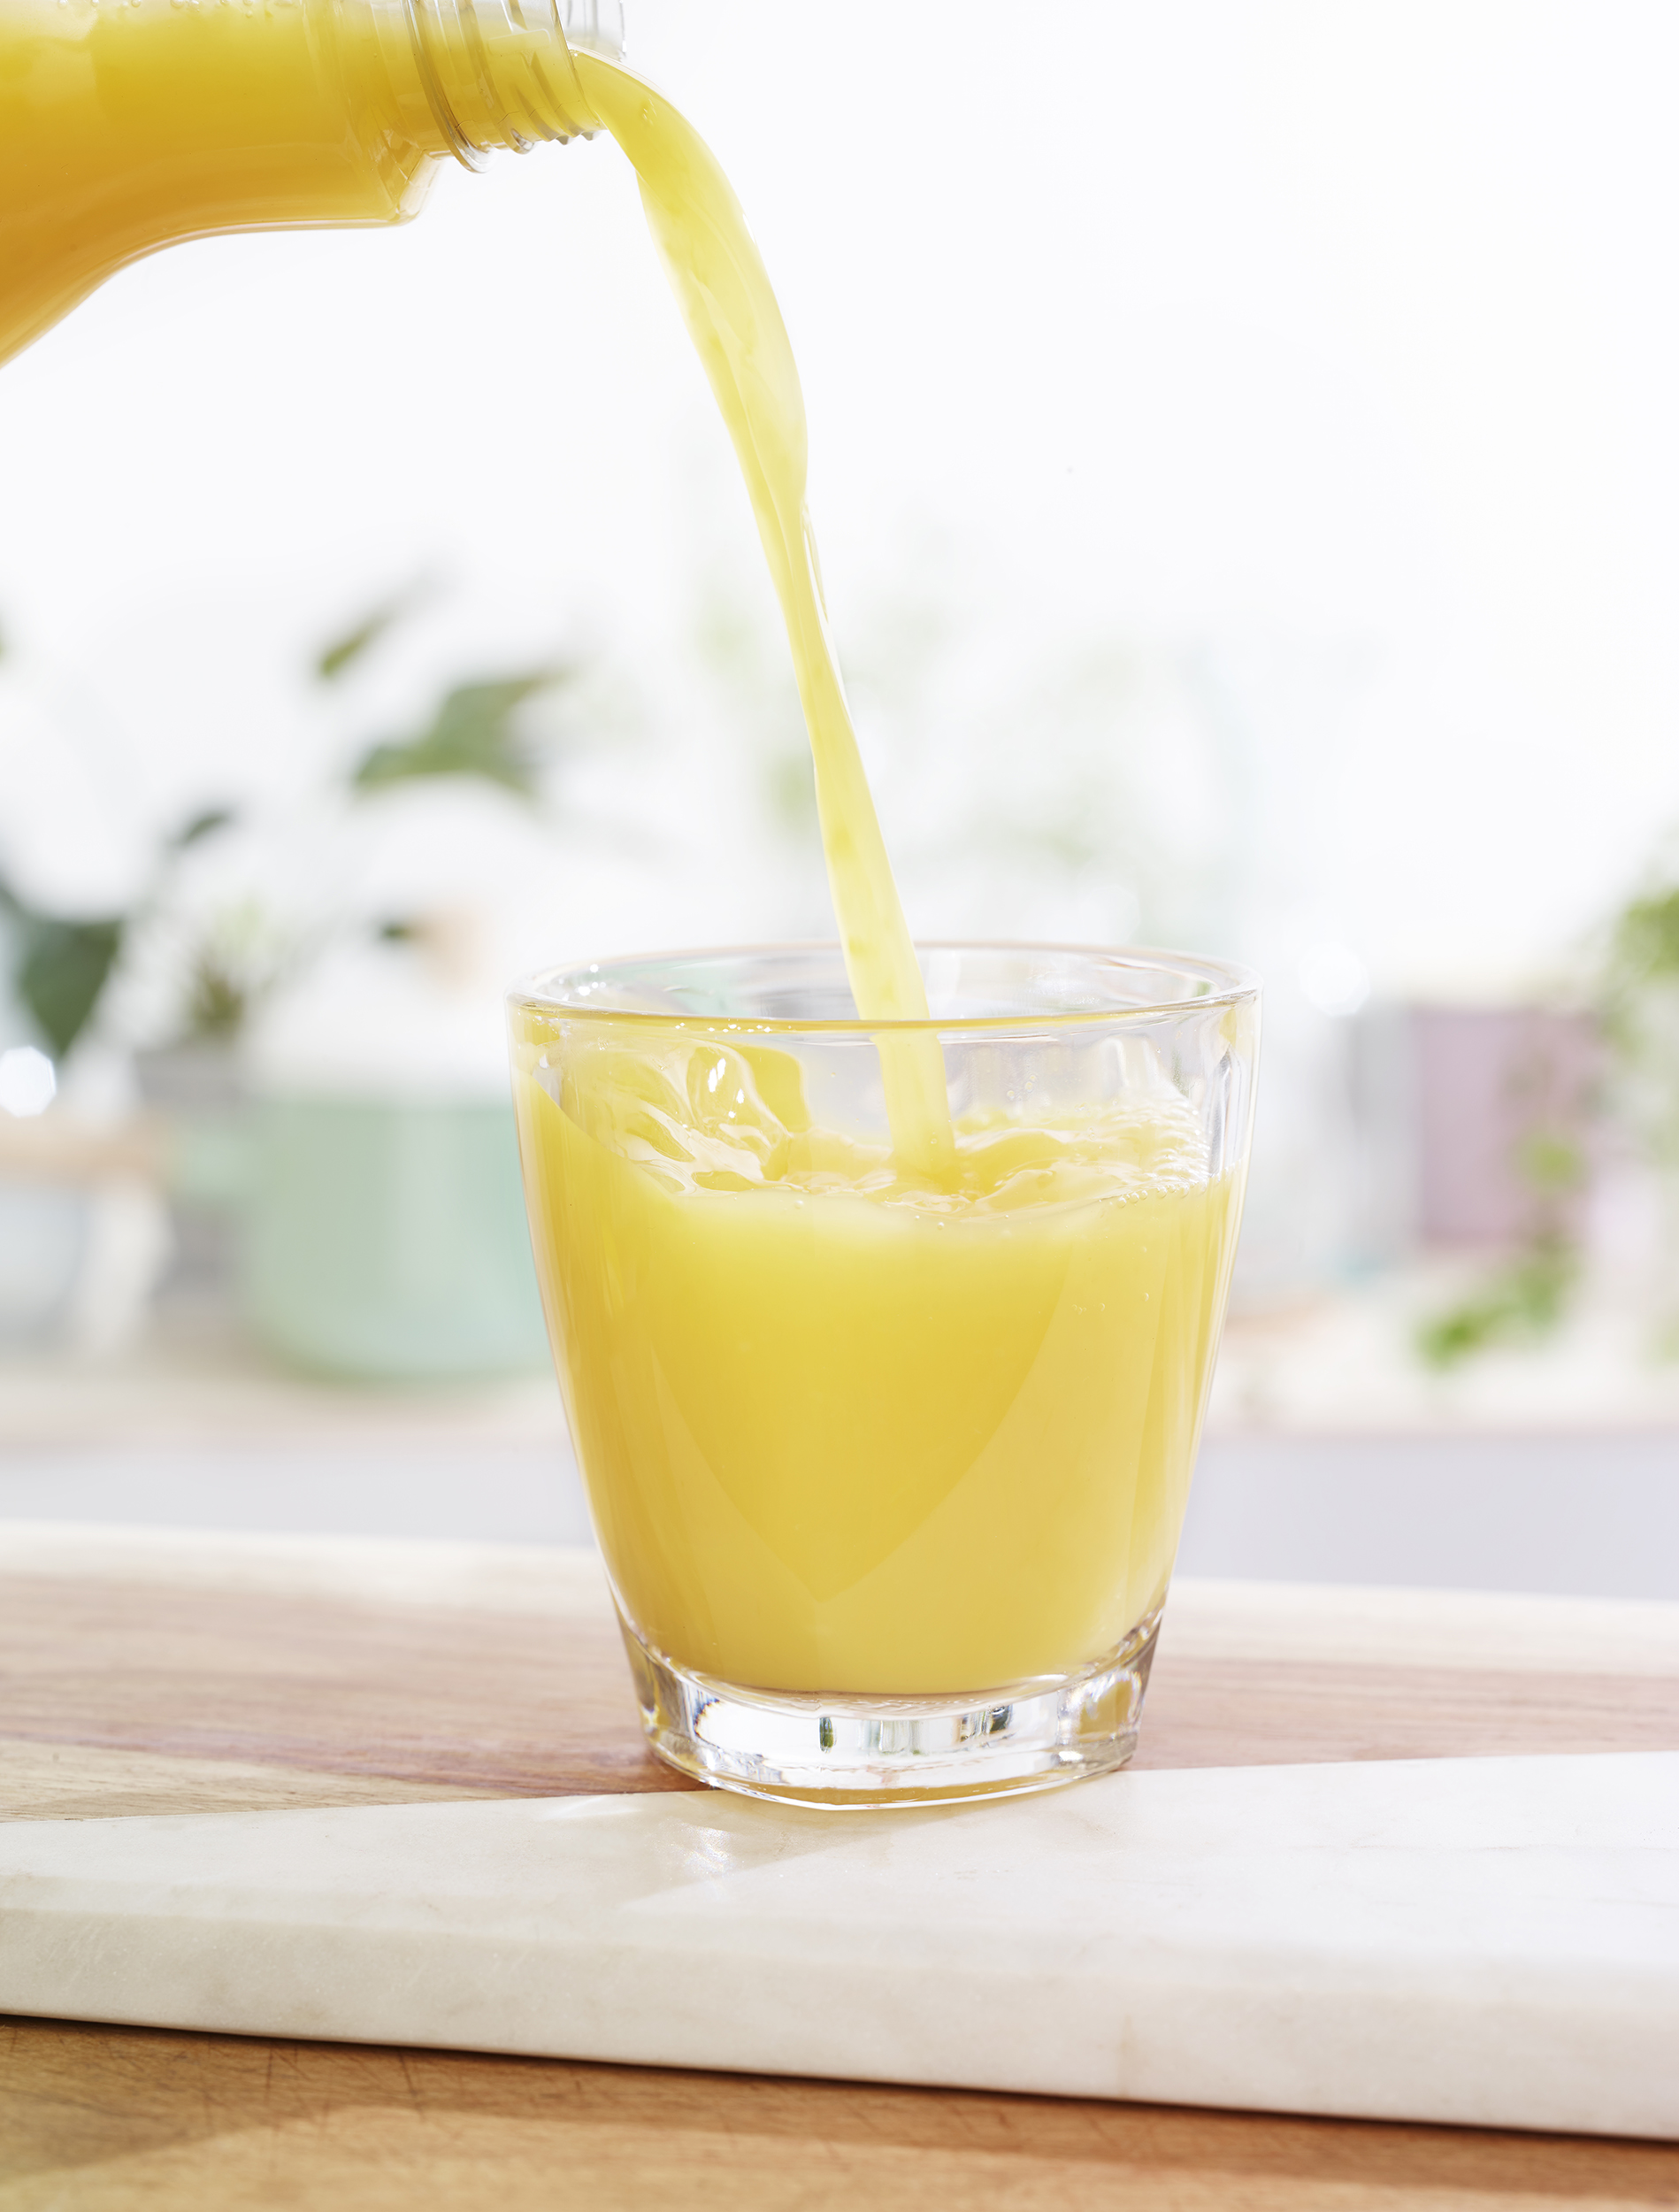 Chelsea Bloxsome | Food Photographer London pouring orange juice